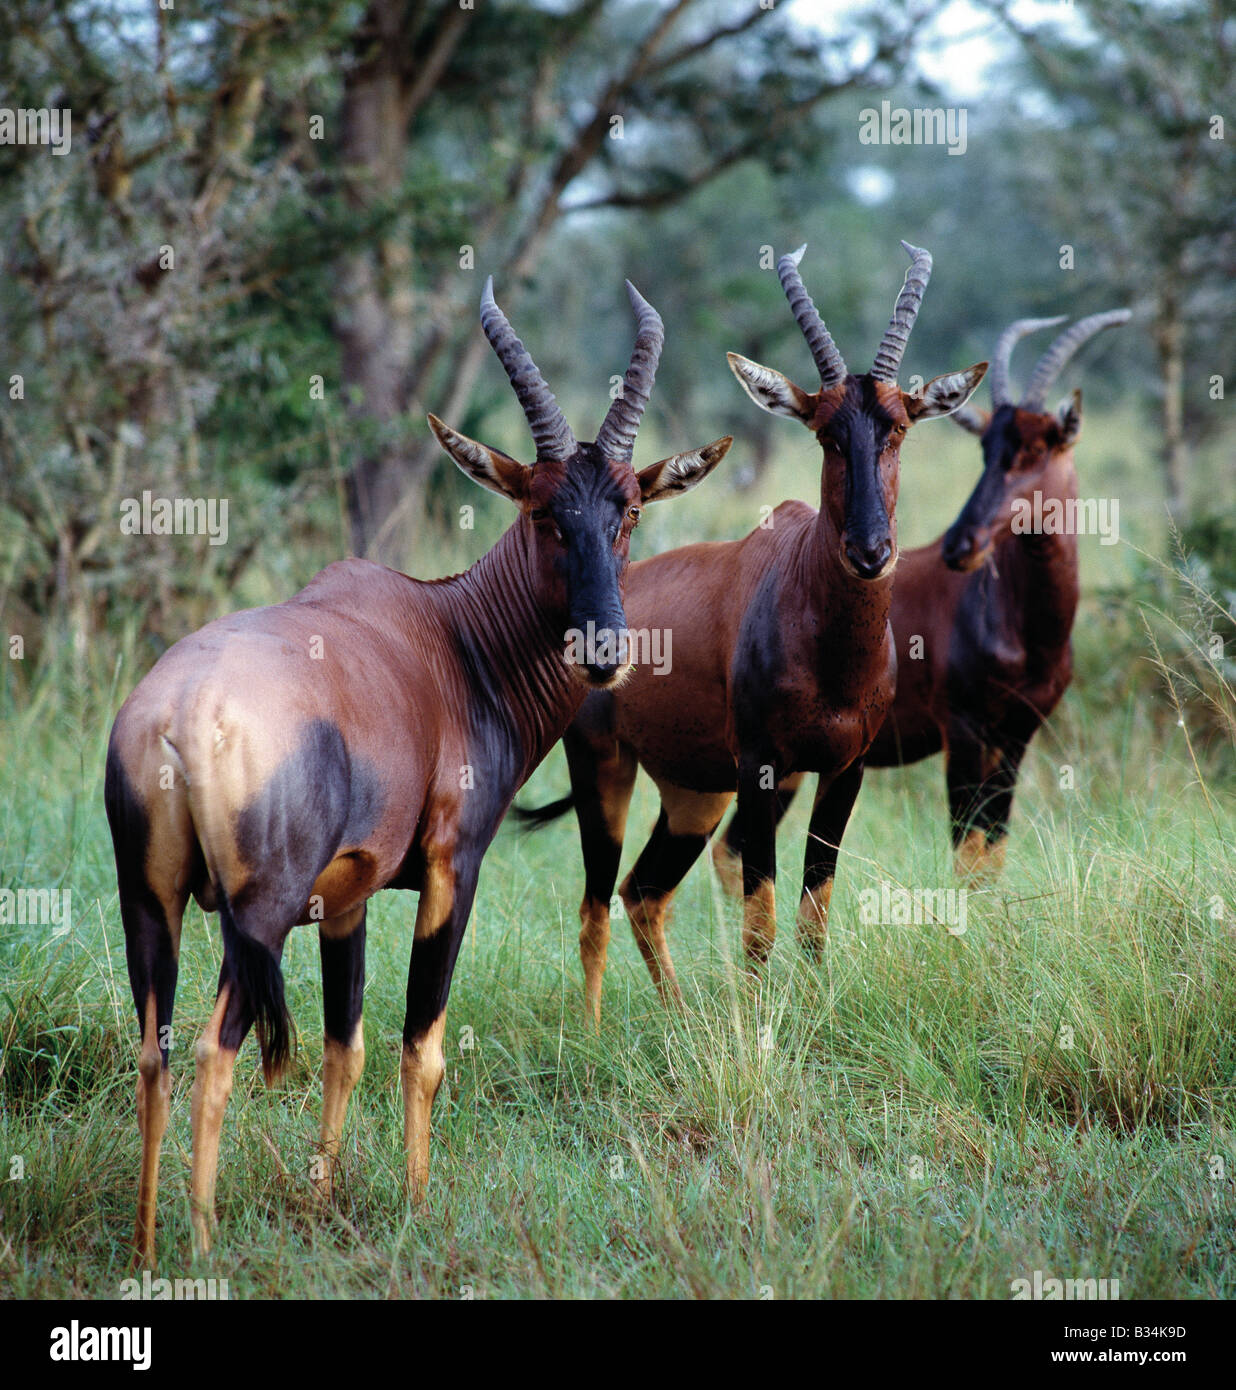 L'Ouganda, le Parc national Queen Elizabeth, Ishasha. Antilope Topi (Damaliscus lunatus jimela) dans la zone d'Ishasha Parc national Queen Elizabeth. Banque D'Images